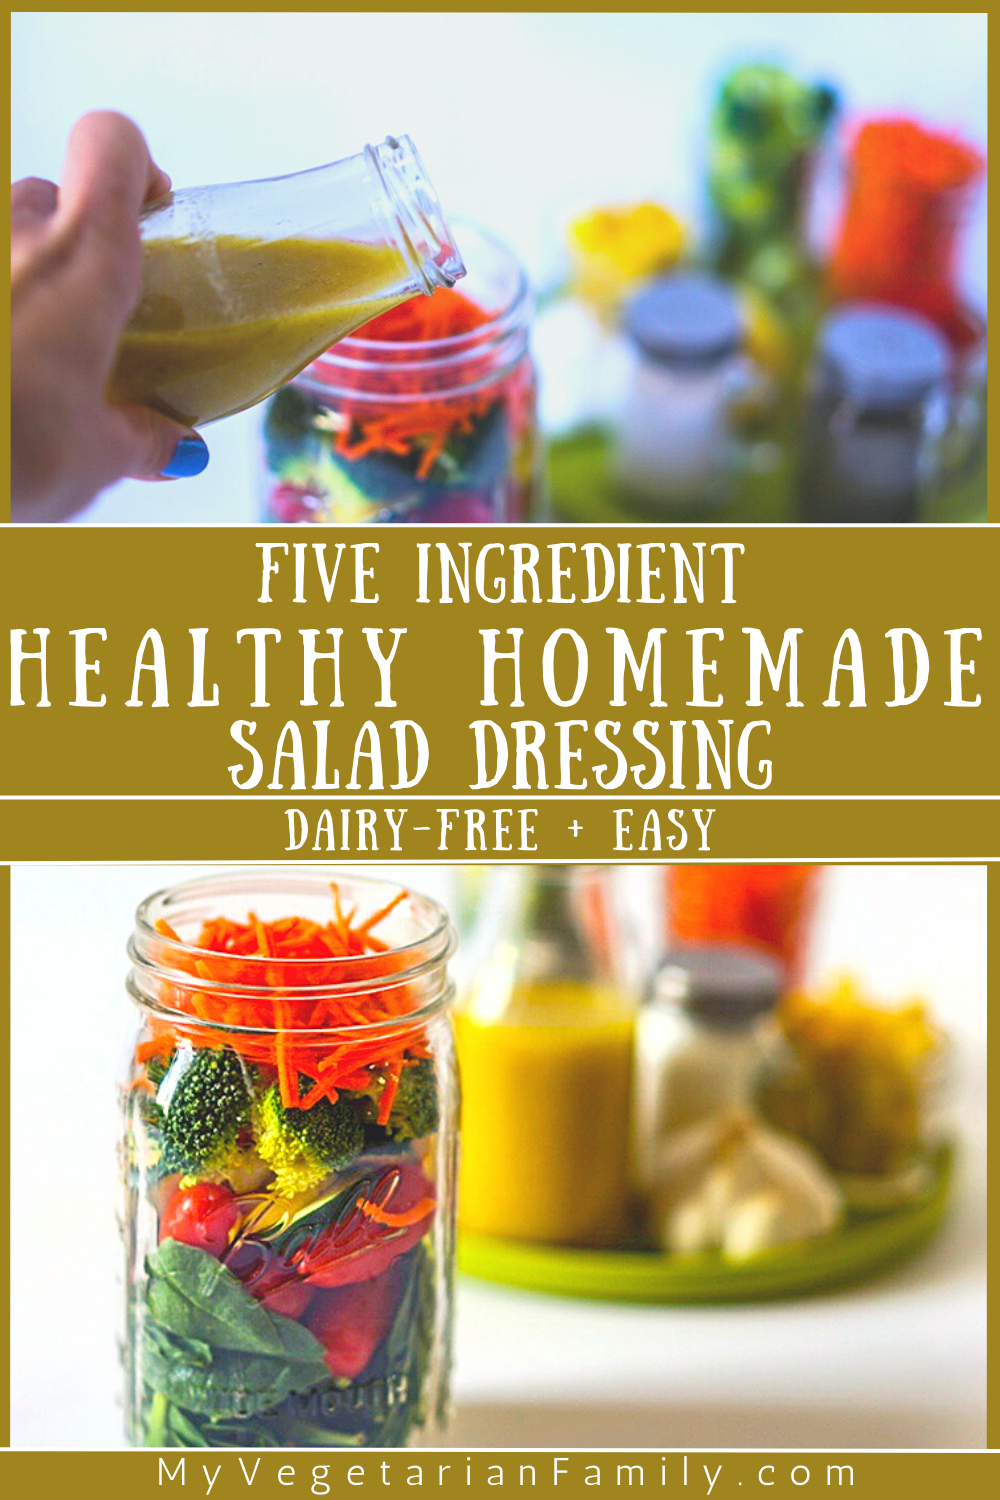 Healthy Homemade Salad Dressing | My Vegetarian Family #5ingredientsaladdressing